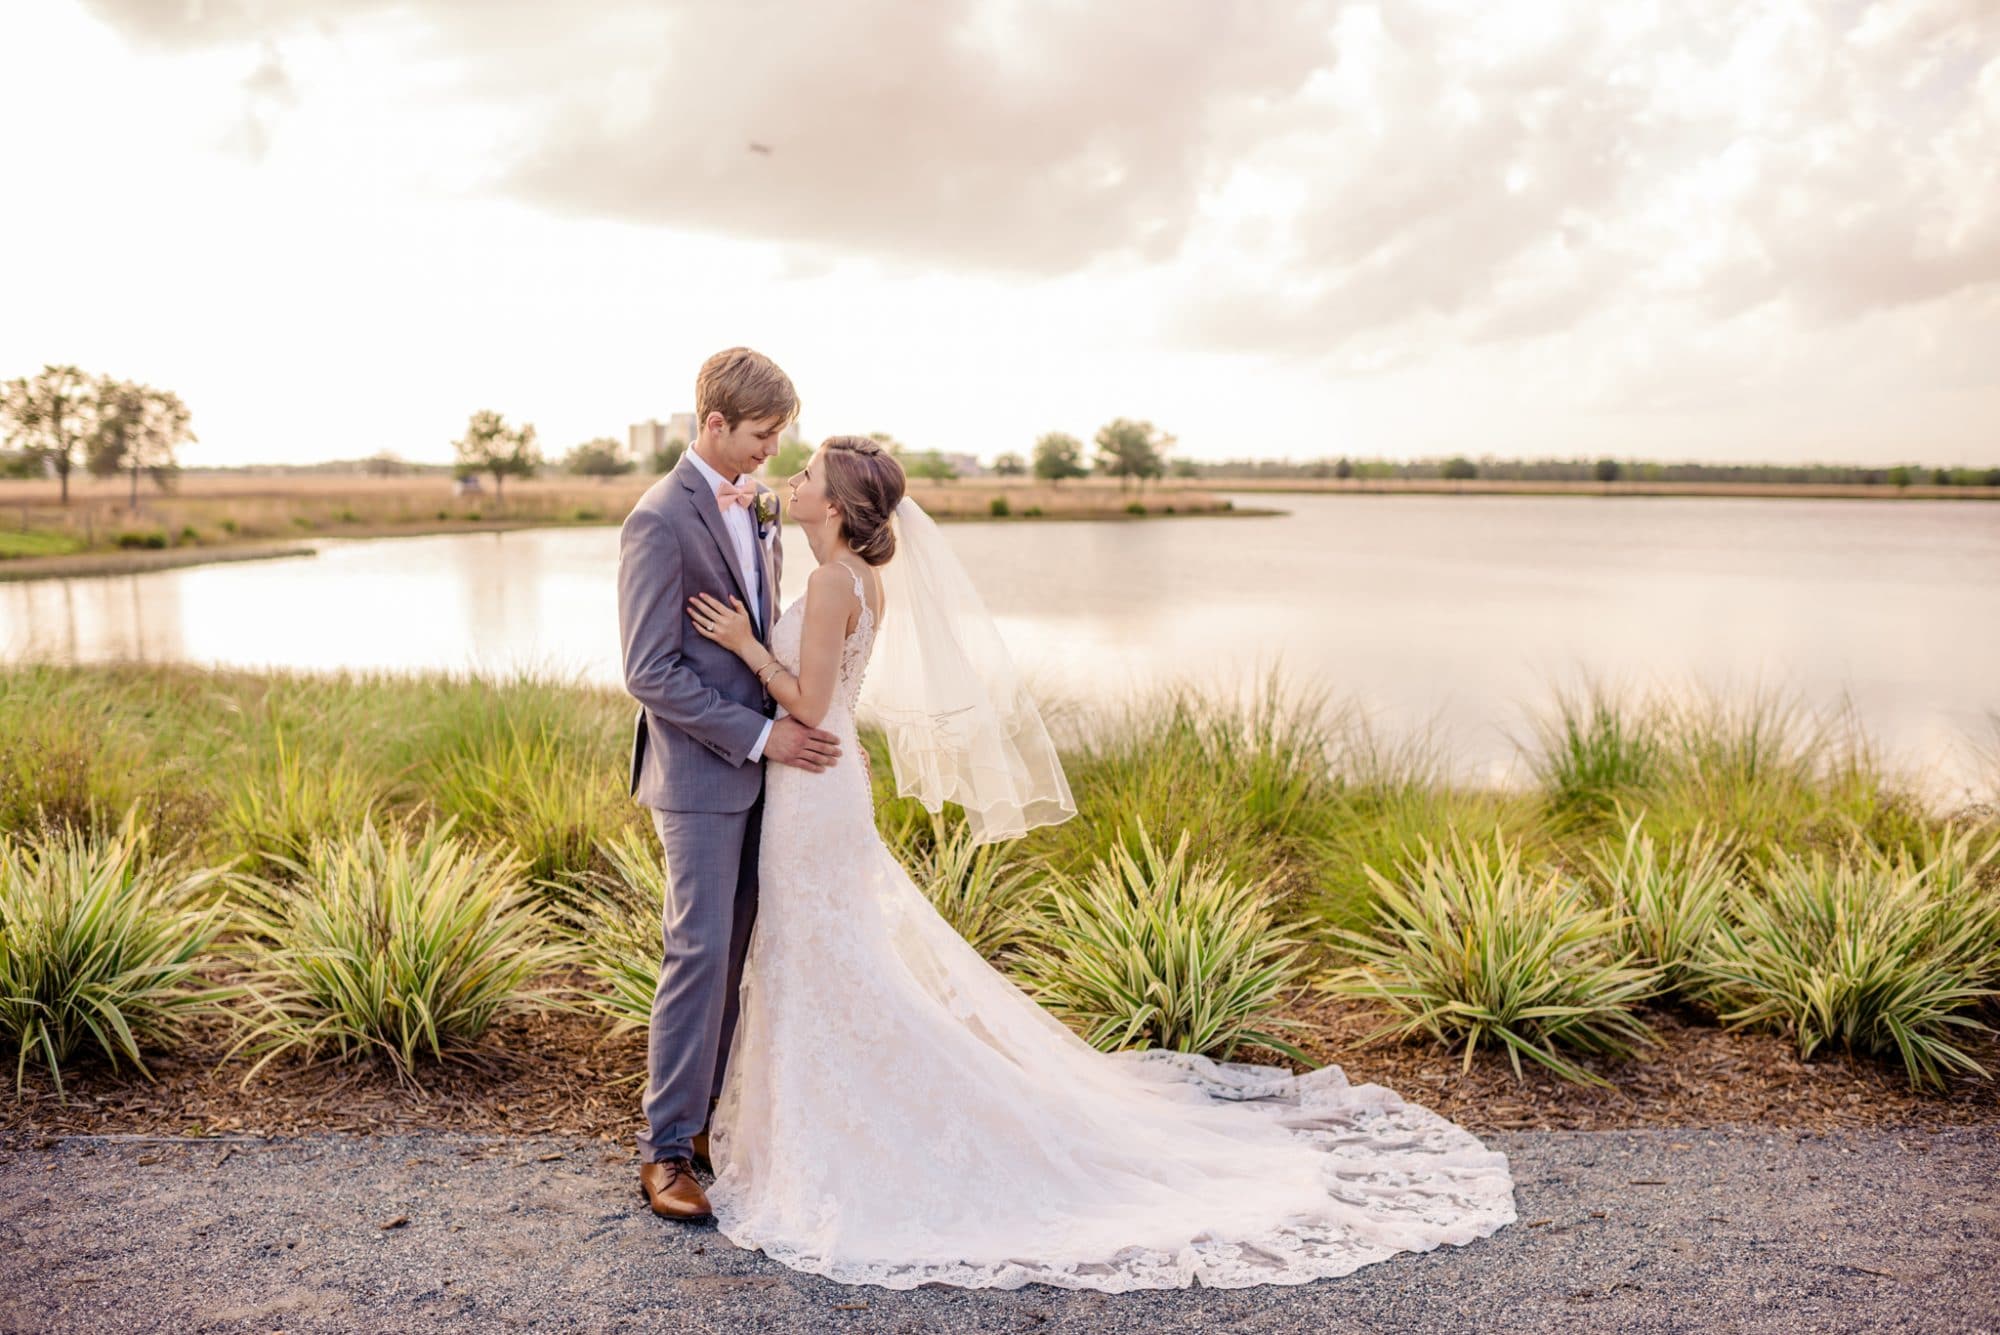 Lakehouse Lake Nona - bride and groom next to lake in Florida prairie setting